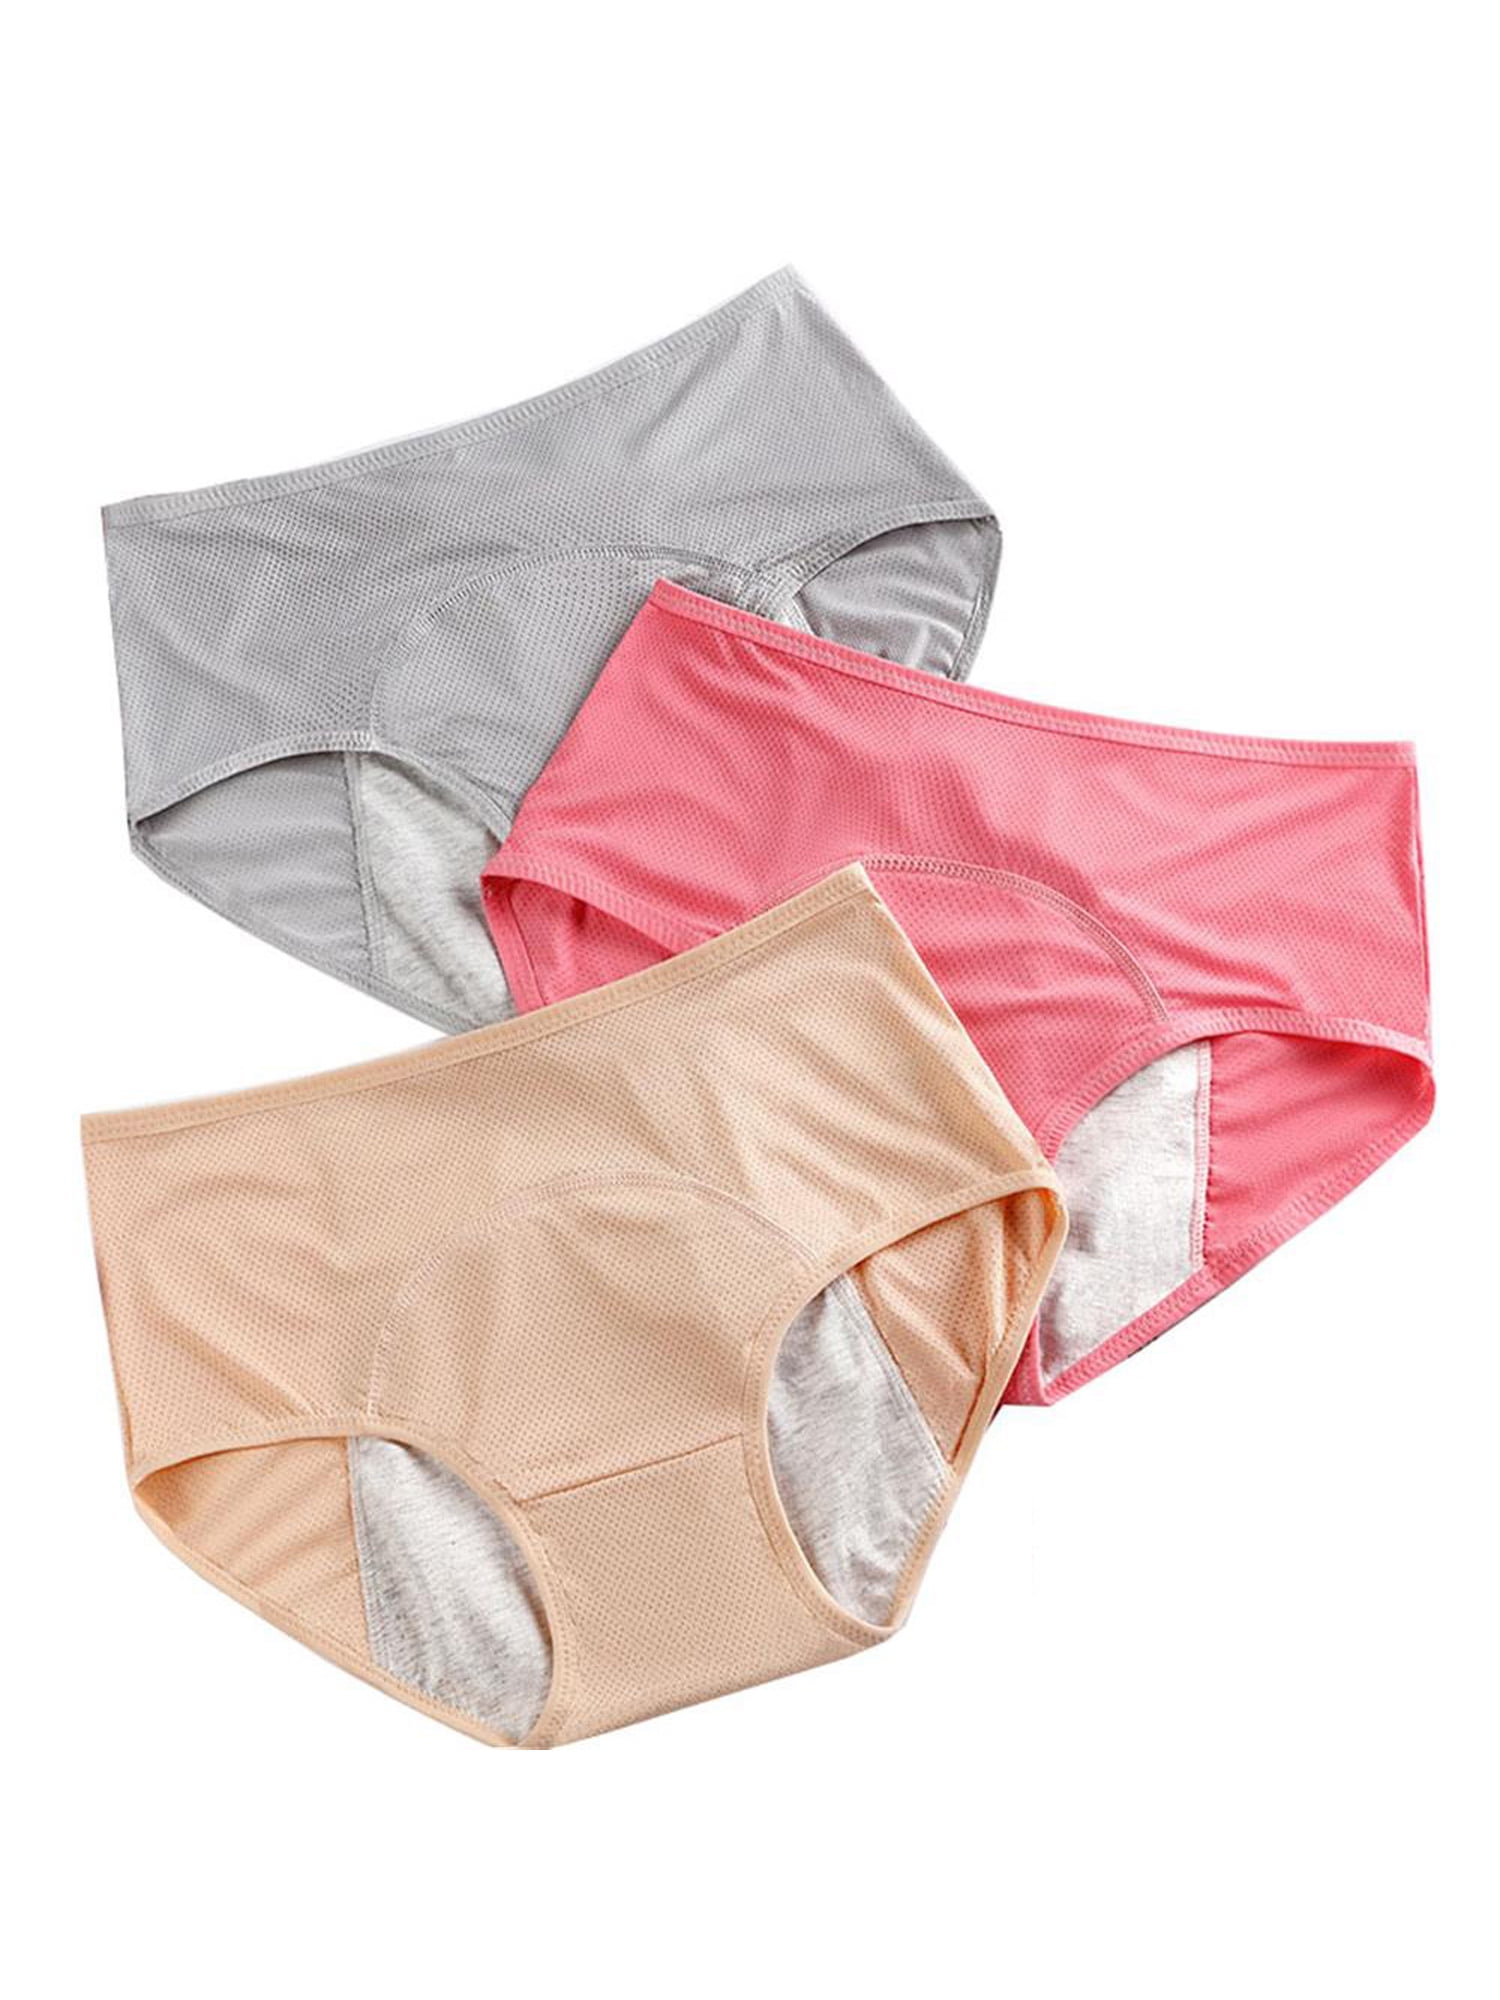 3Pcs/pack Briefs Women Cotton Underwear Comfort Solid Lingerie Knickers Panties